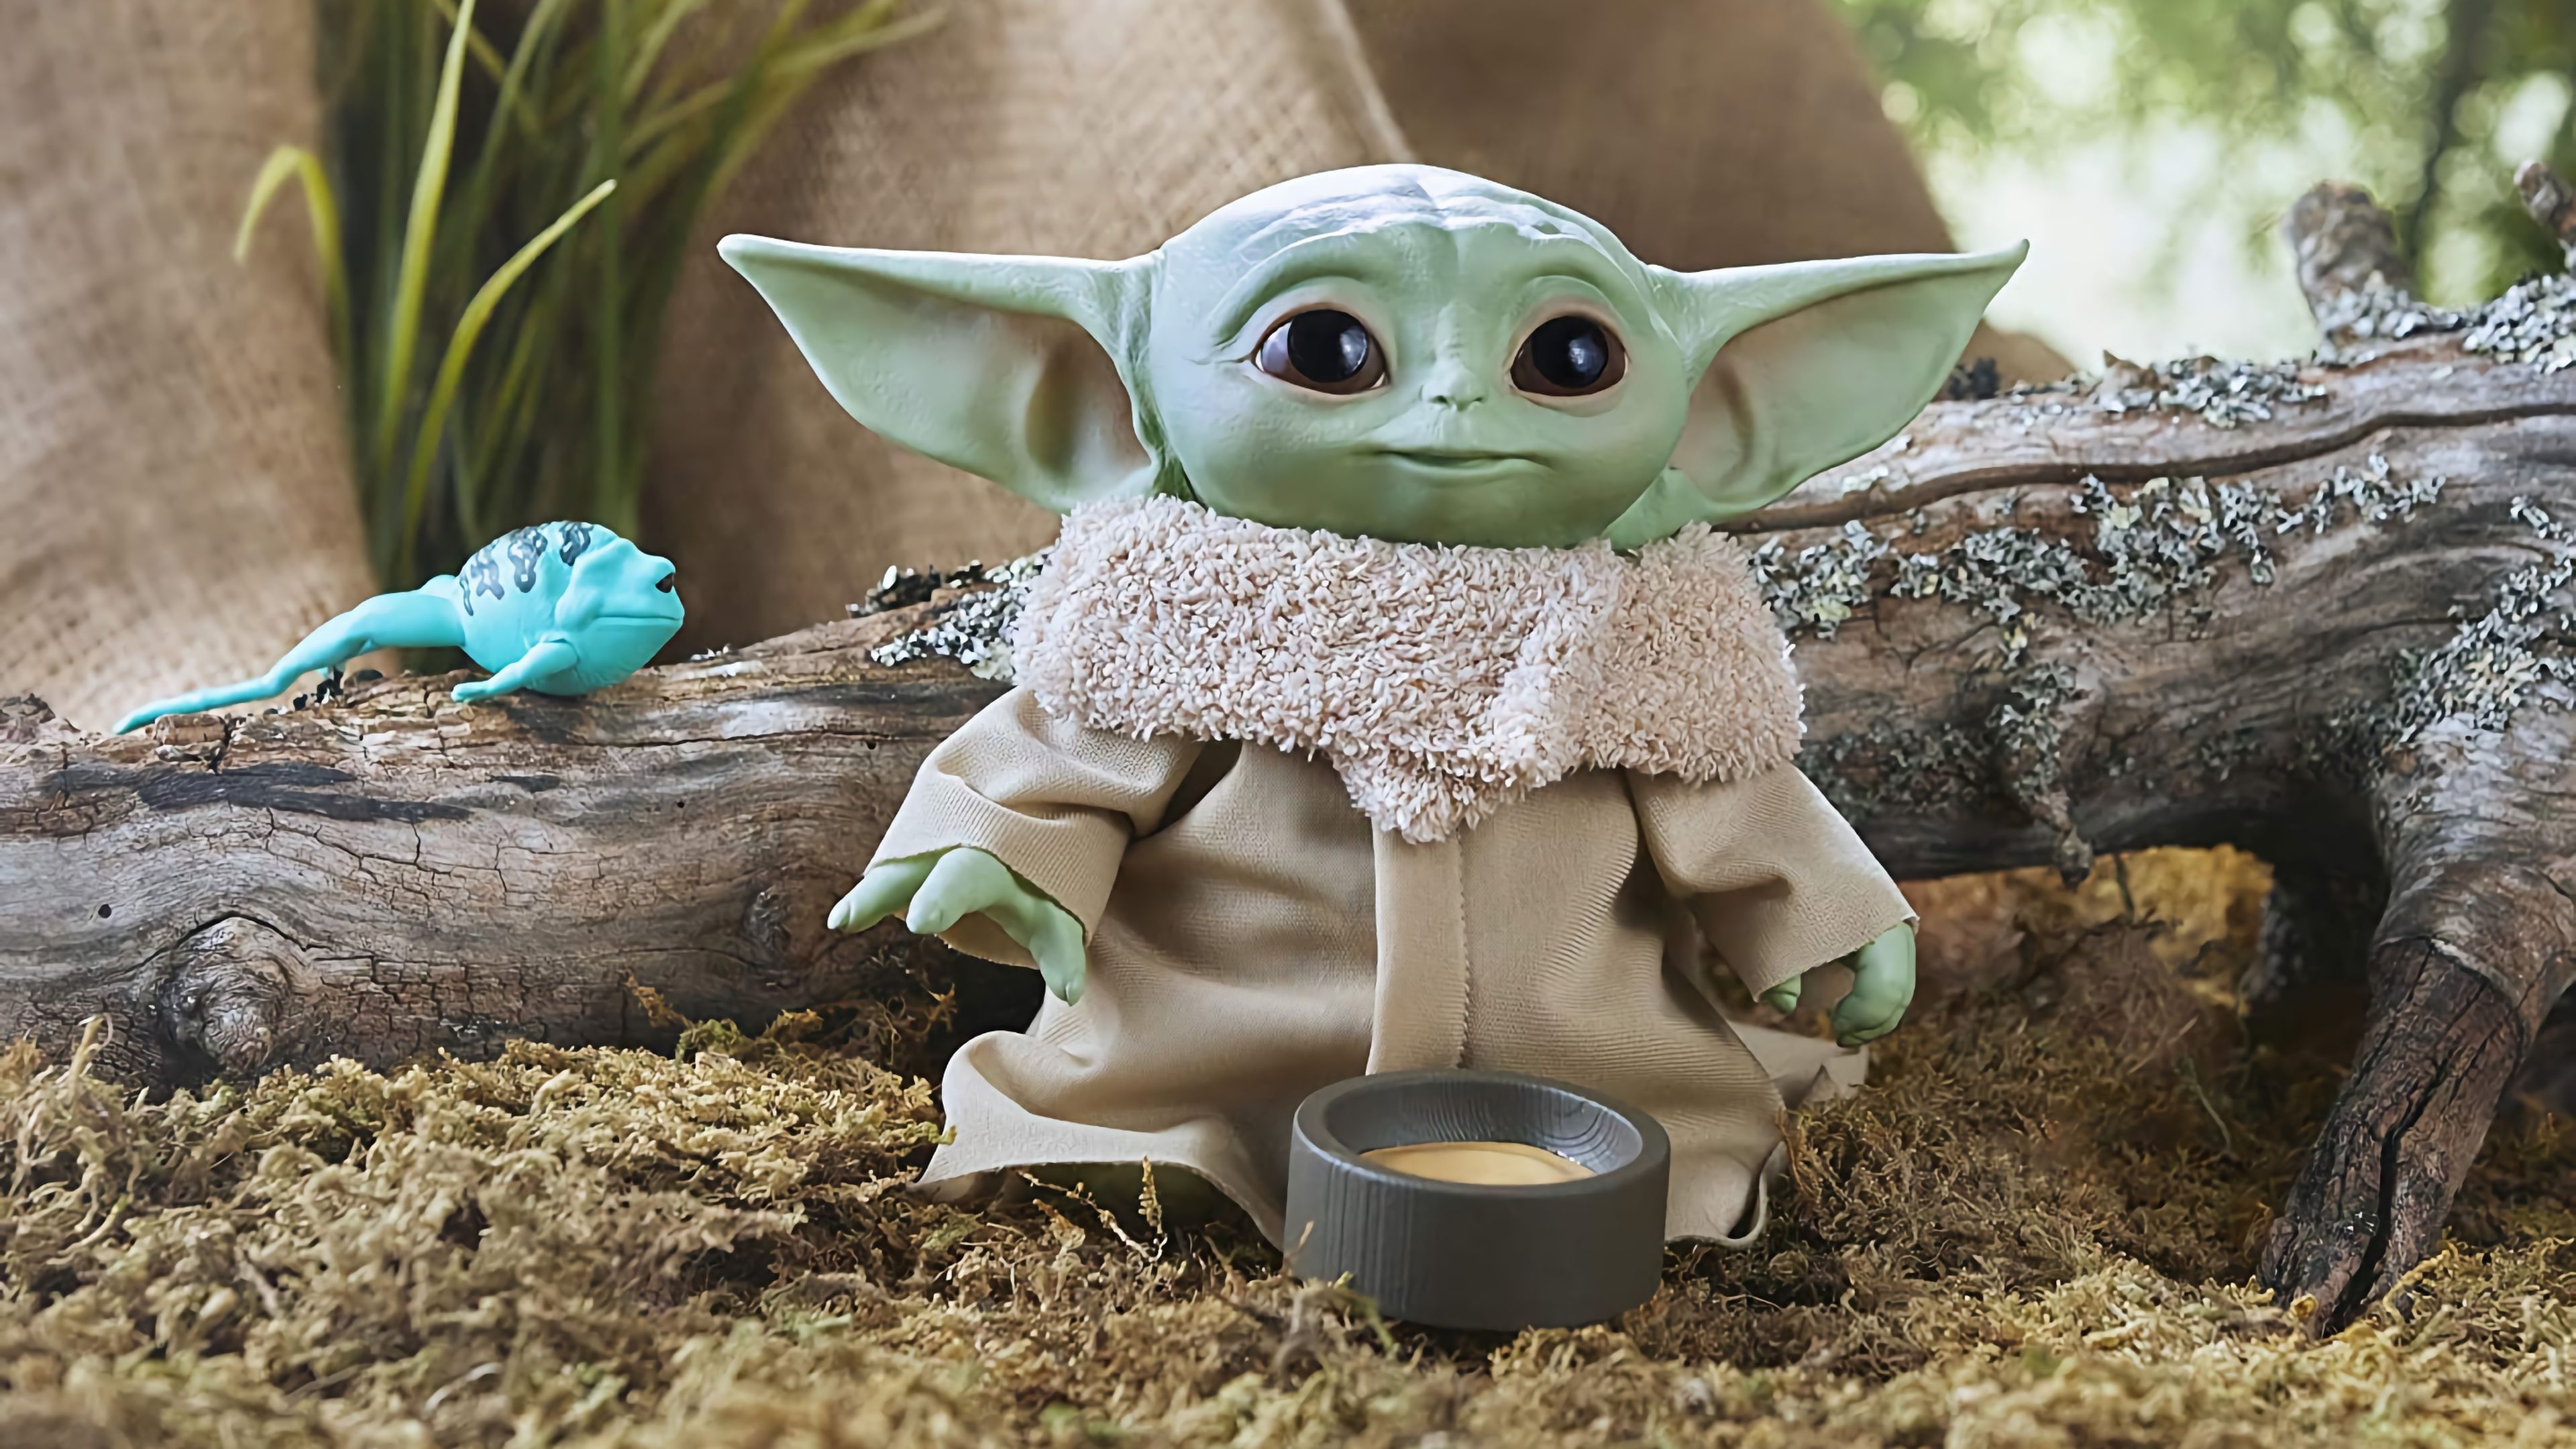 Grogu or Baby Yoda plush in The Mandalorian